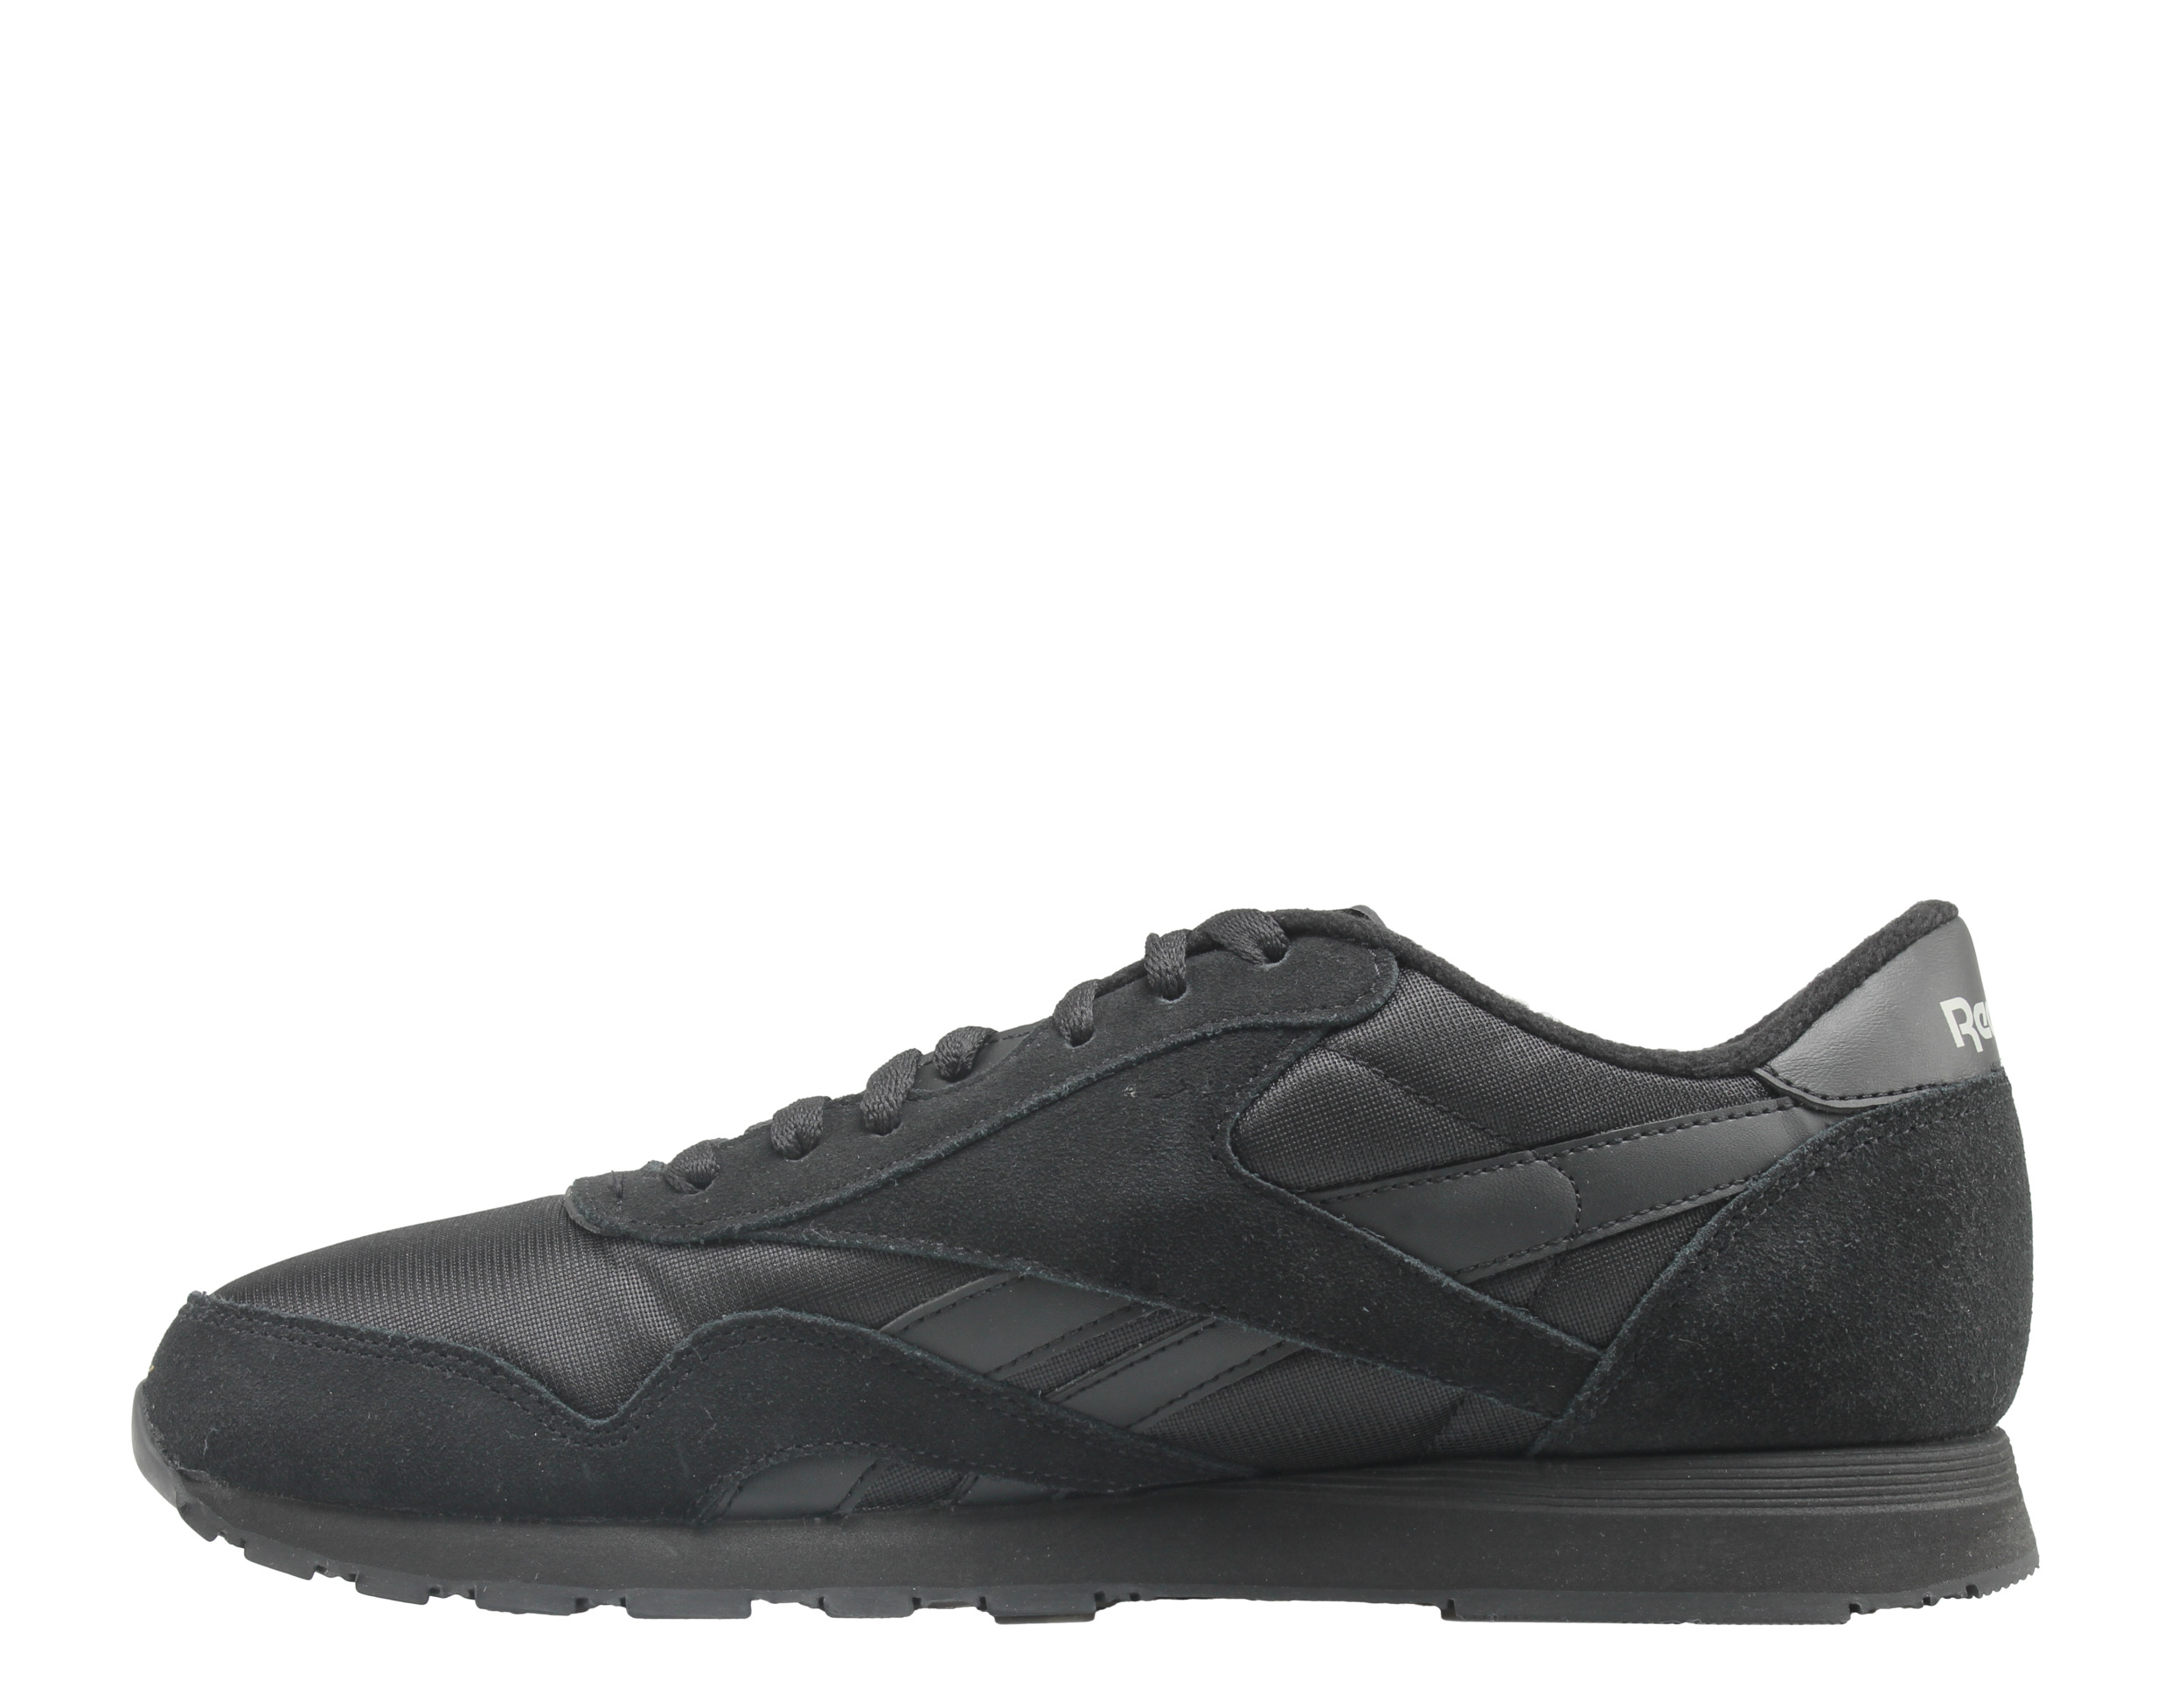 Reebok Classic Nylon Men's Running Shoes Size 11 - image 3 of 6